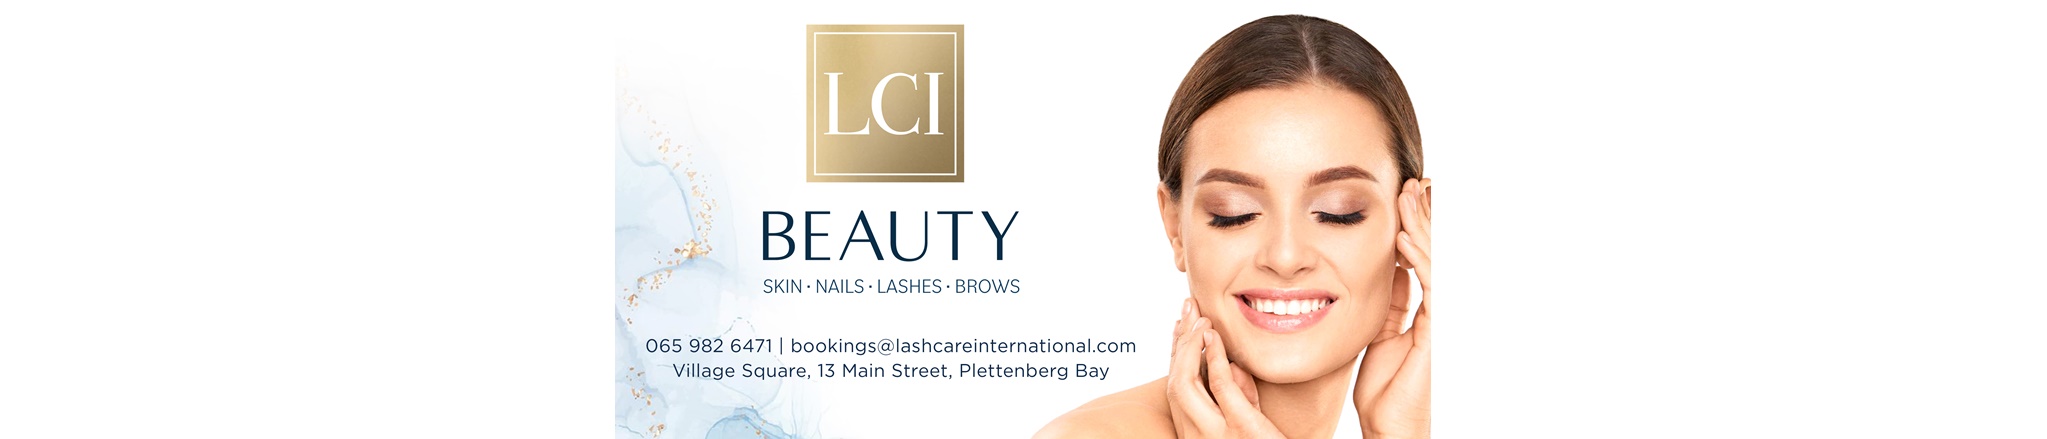 LCI Beauty Logo 2